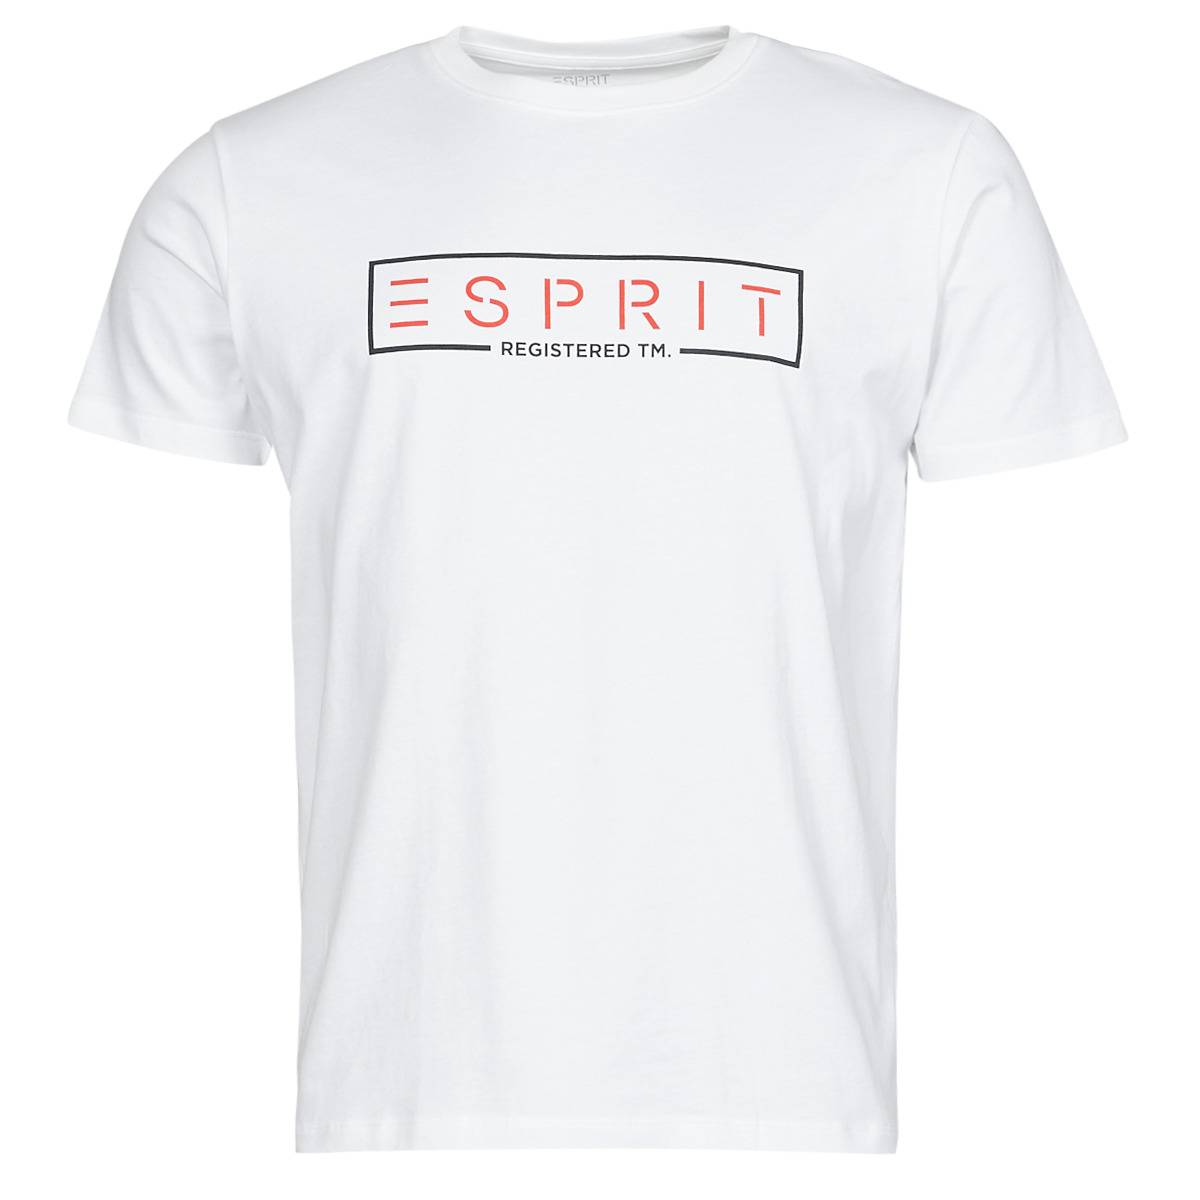 Kleidung Herren T-Shirts Esprit BCI N cn aw ss Weiß